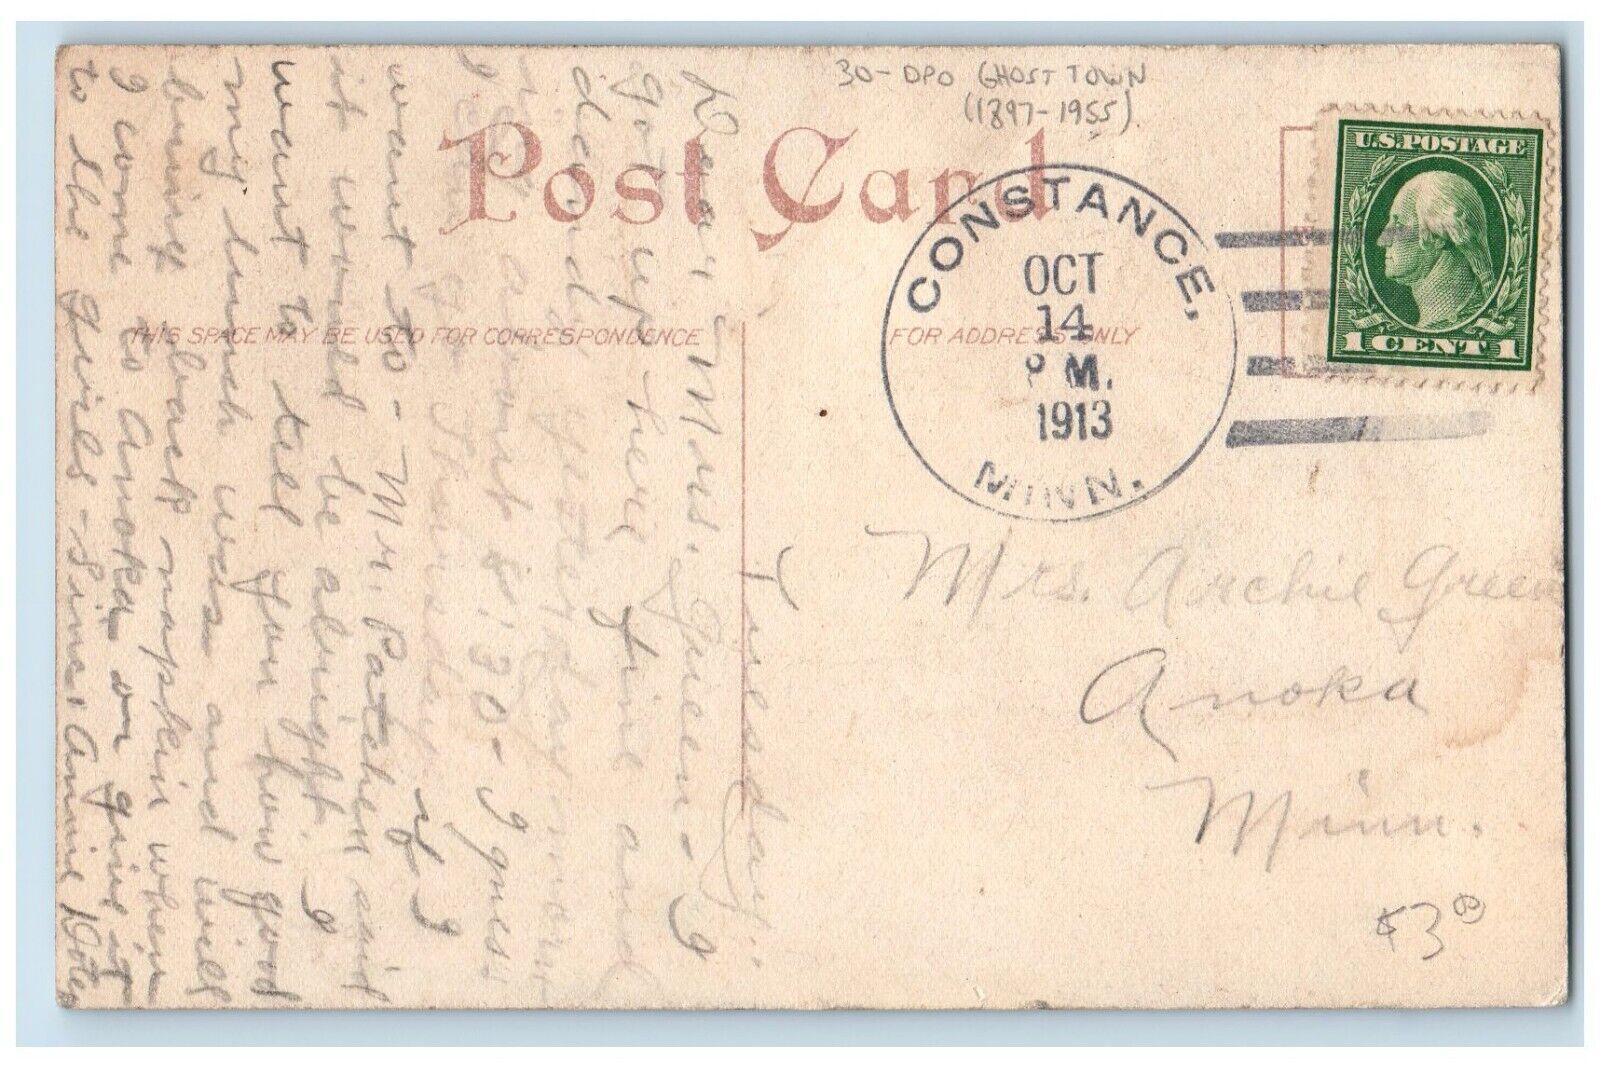 DPO Ghost Town (1897 - 1955) Minneapolis MN Postcard West High School 1913